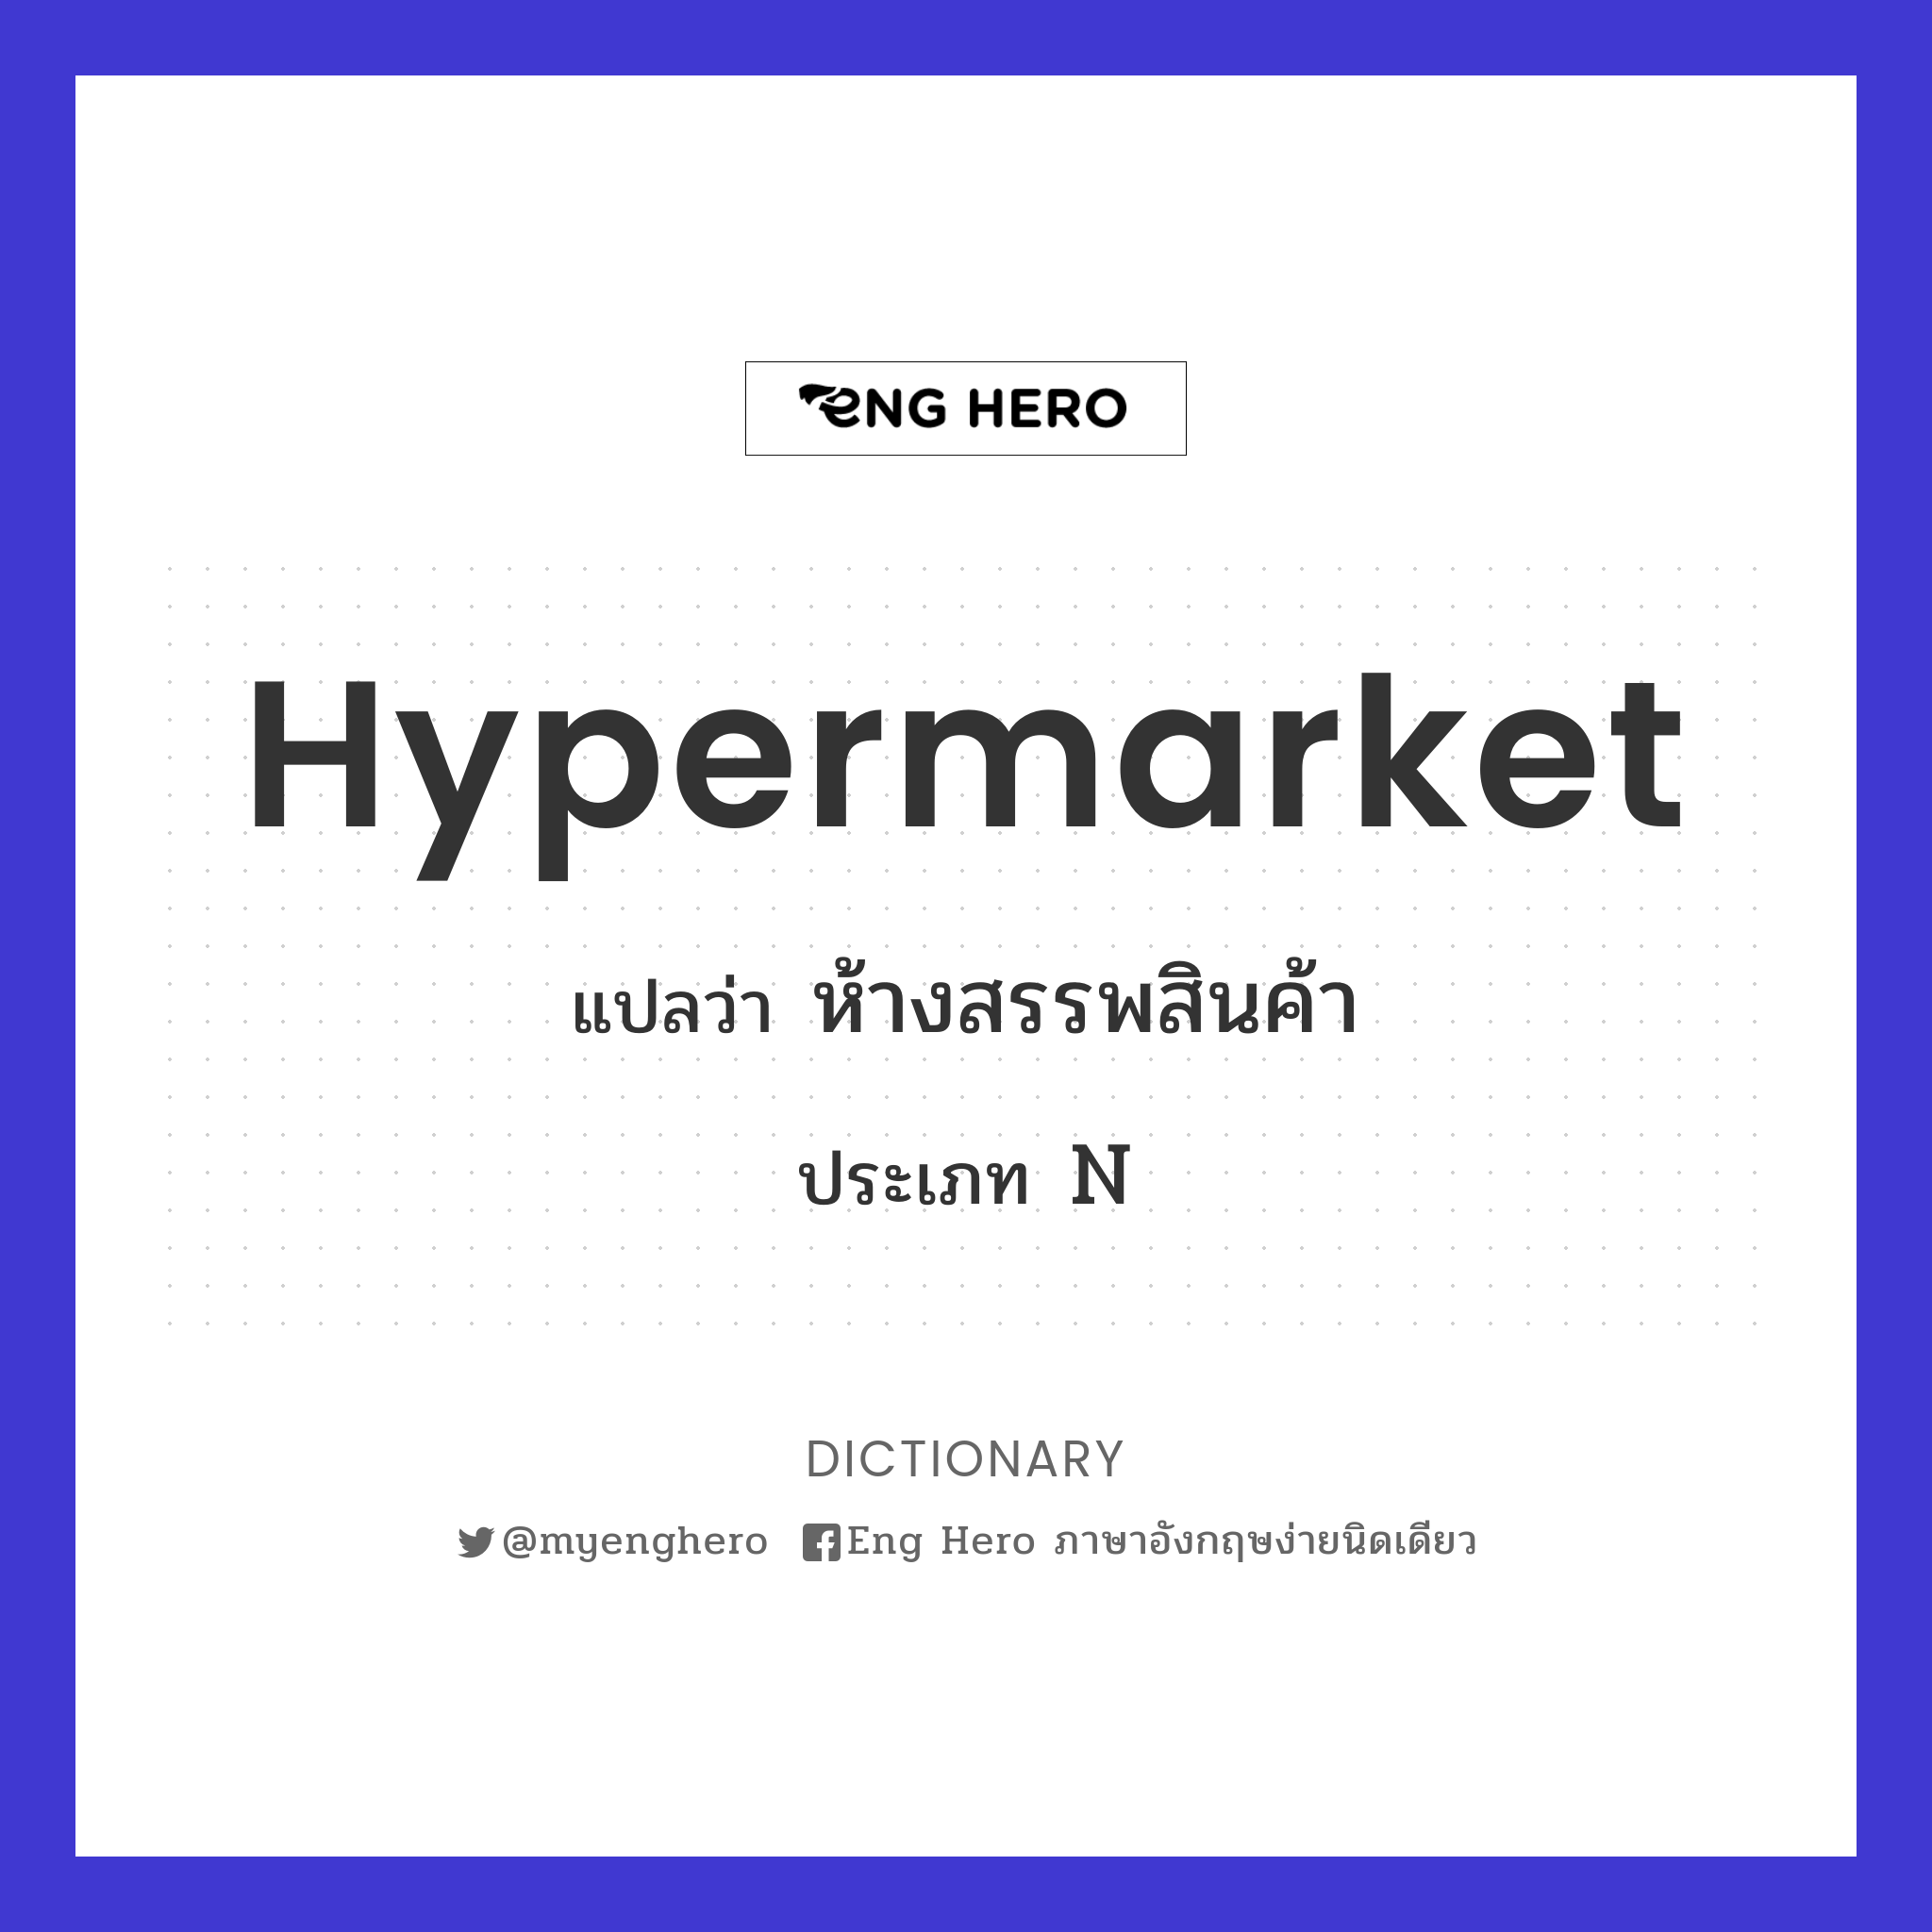 hypermarket